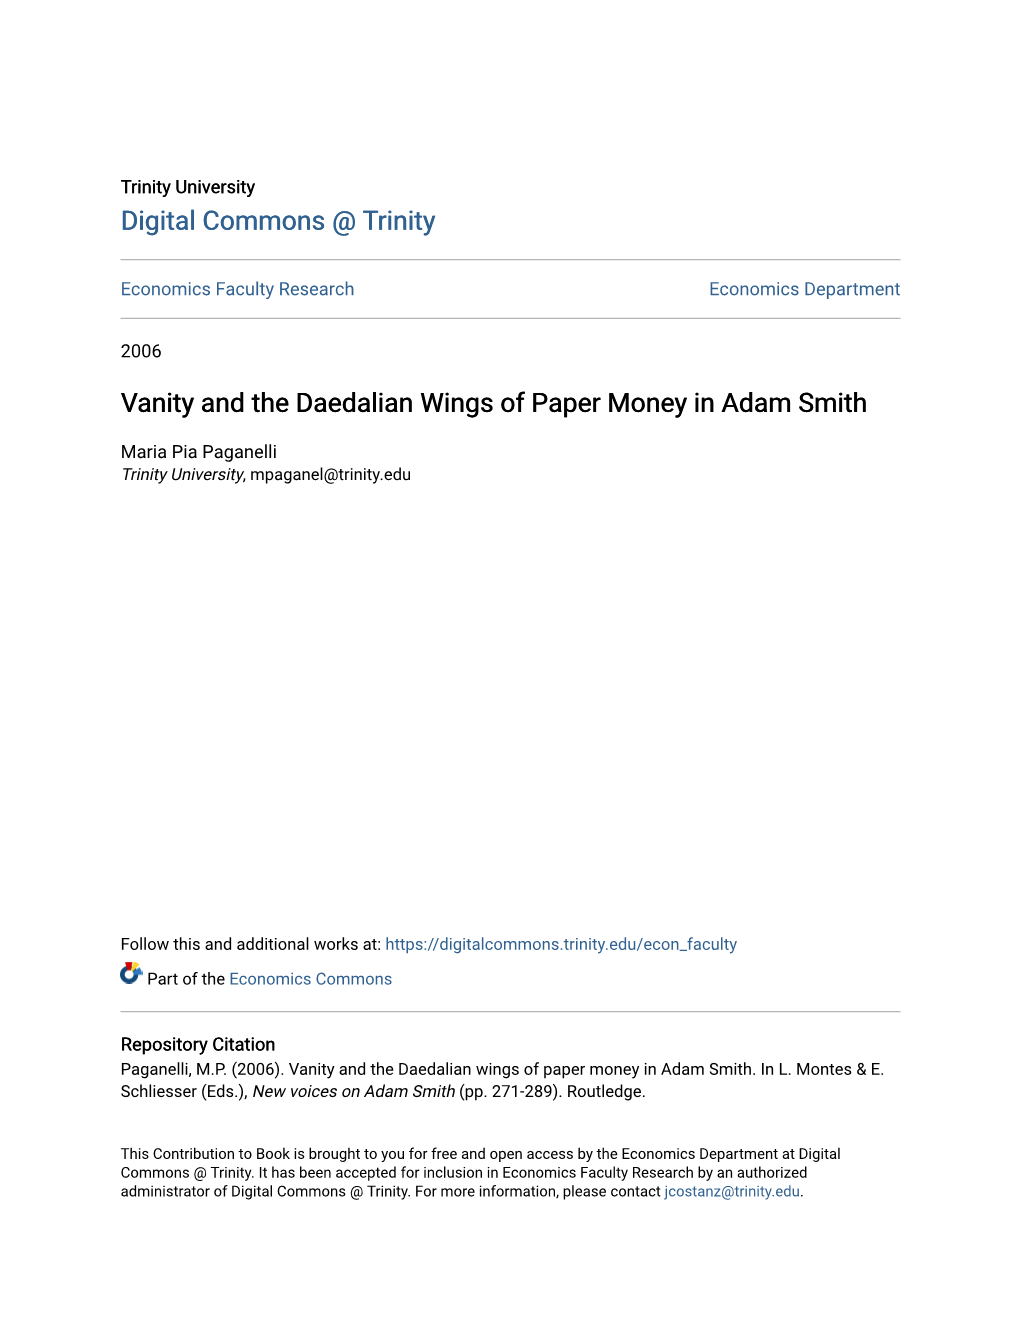 Vanity and the Daedalian Wings of Paper Money in Adam Smith